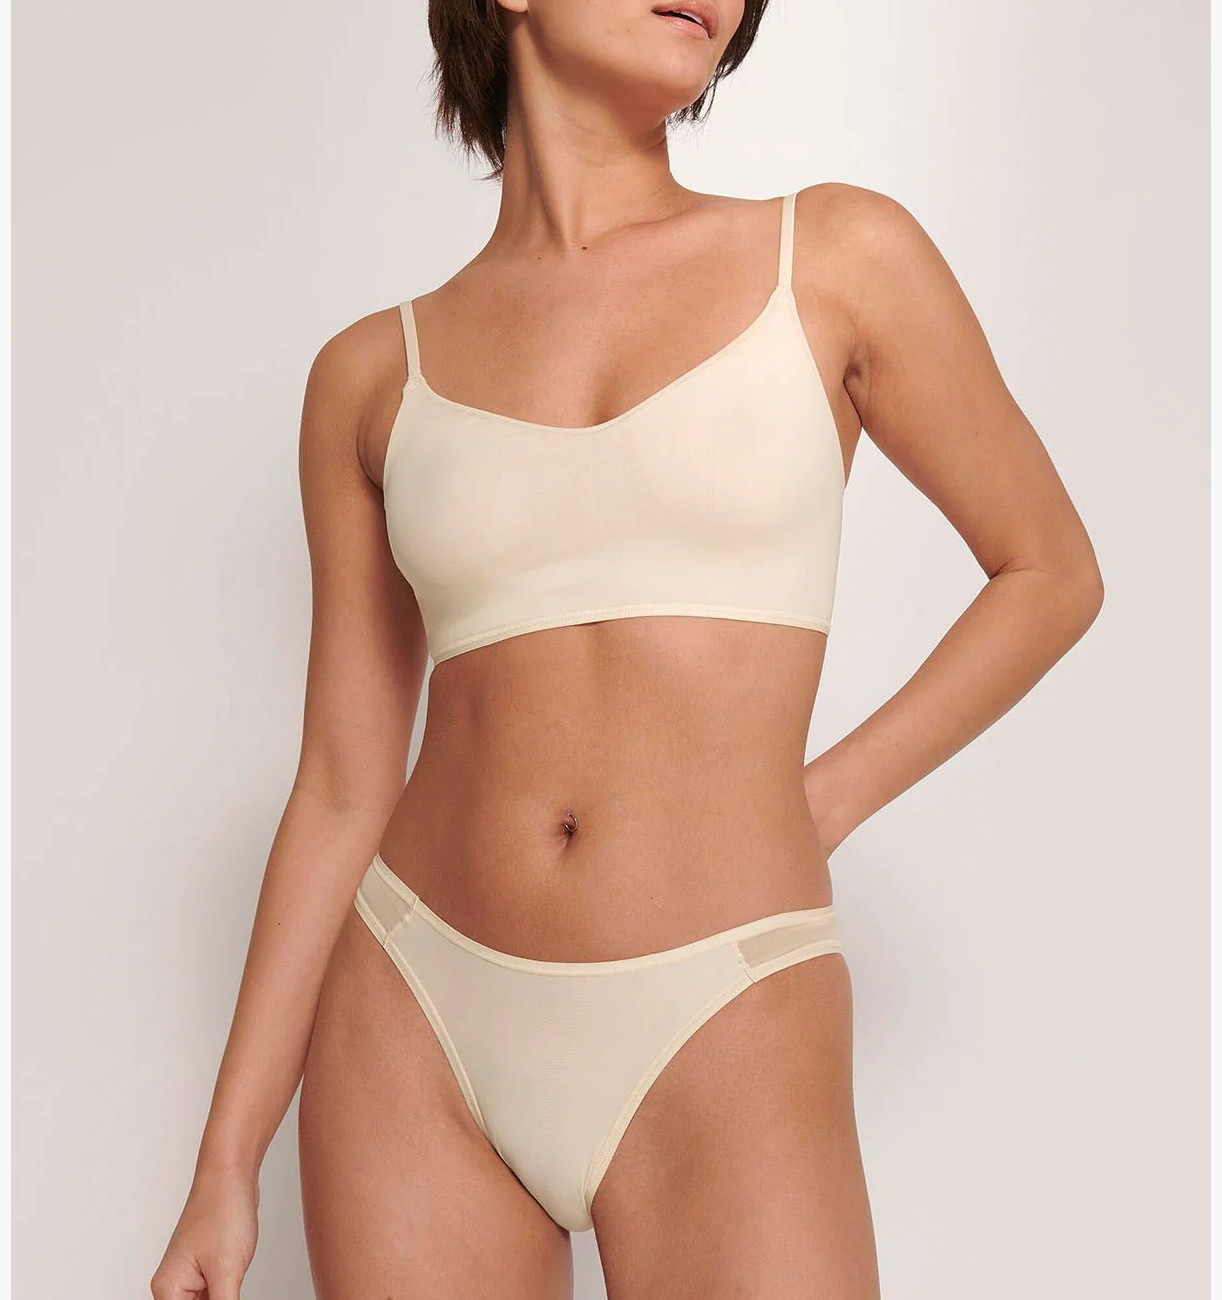 Kayser Women's Brazilian Push Up Bra - White - Size 12A